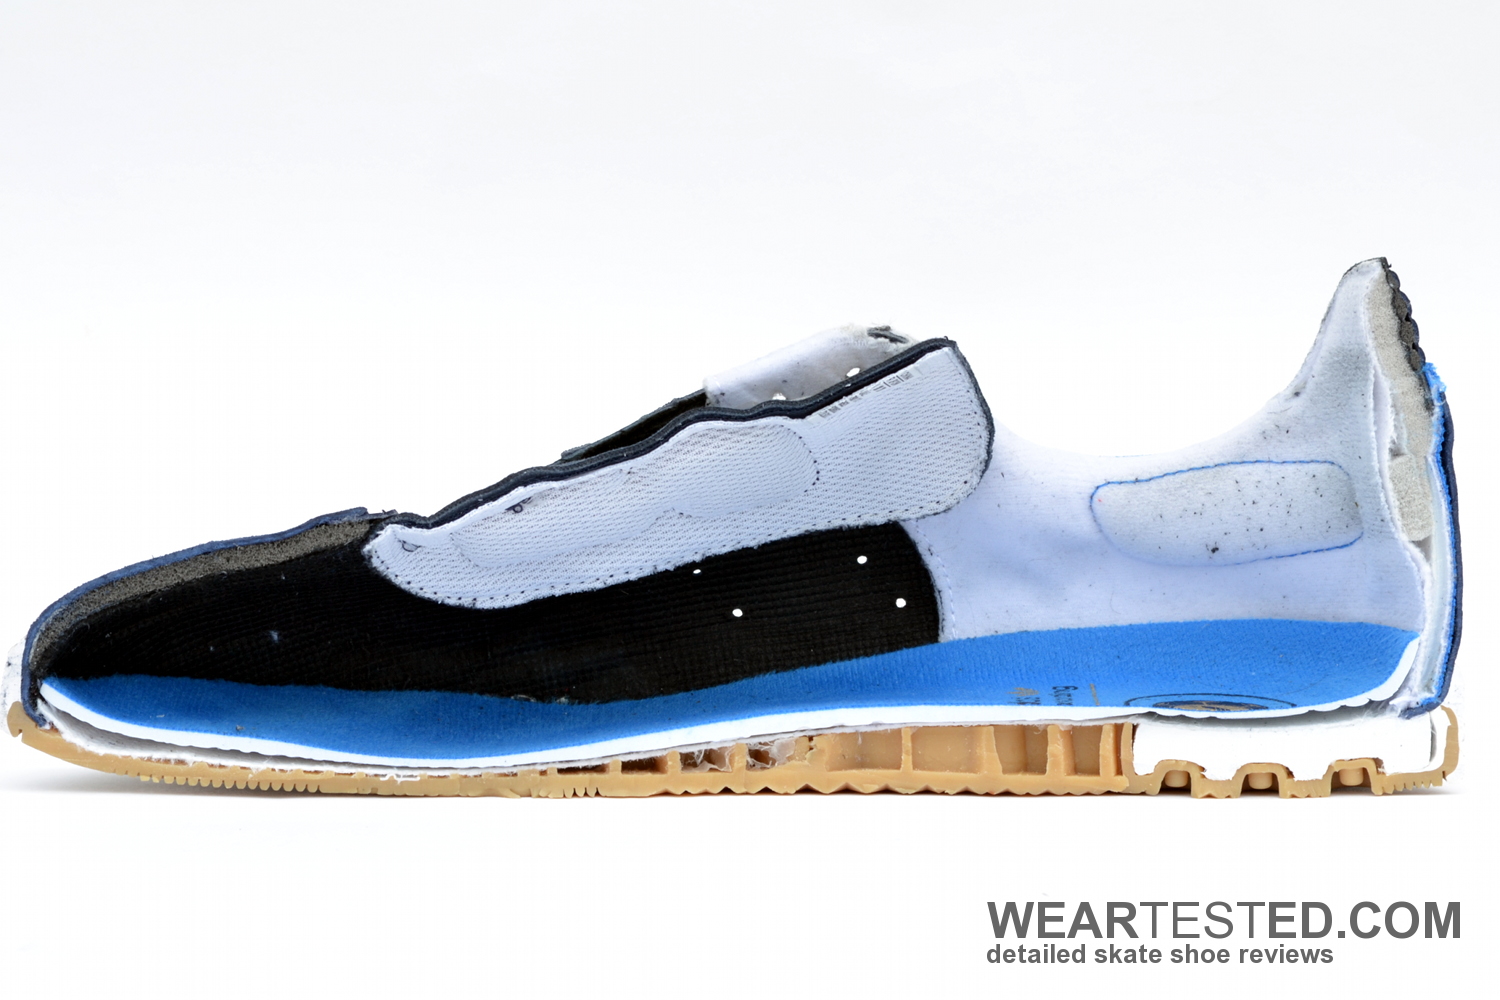 Bemyndige famlende Relativ størrelse adidas Busenitz ADV - Weartested - detailed skate shoe reviews